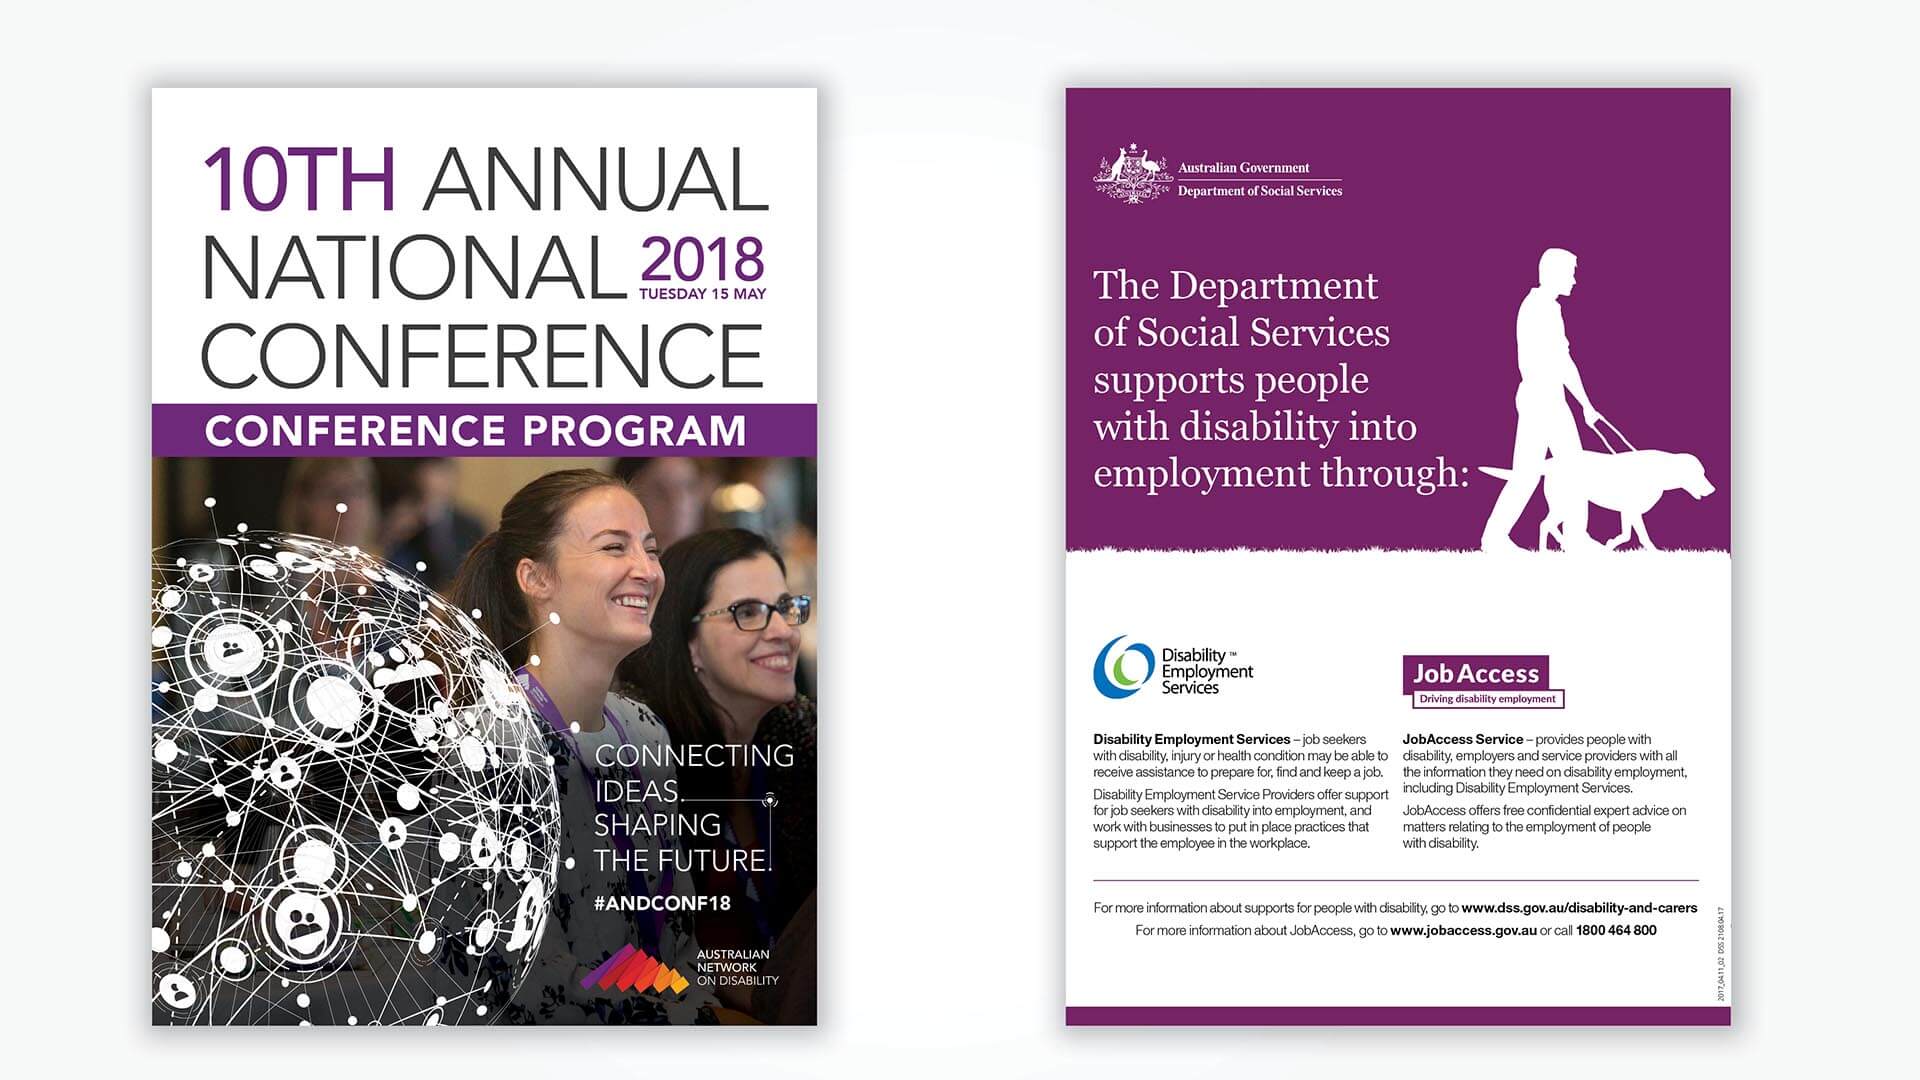 Australian Network on Disability Brochure design by TCA